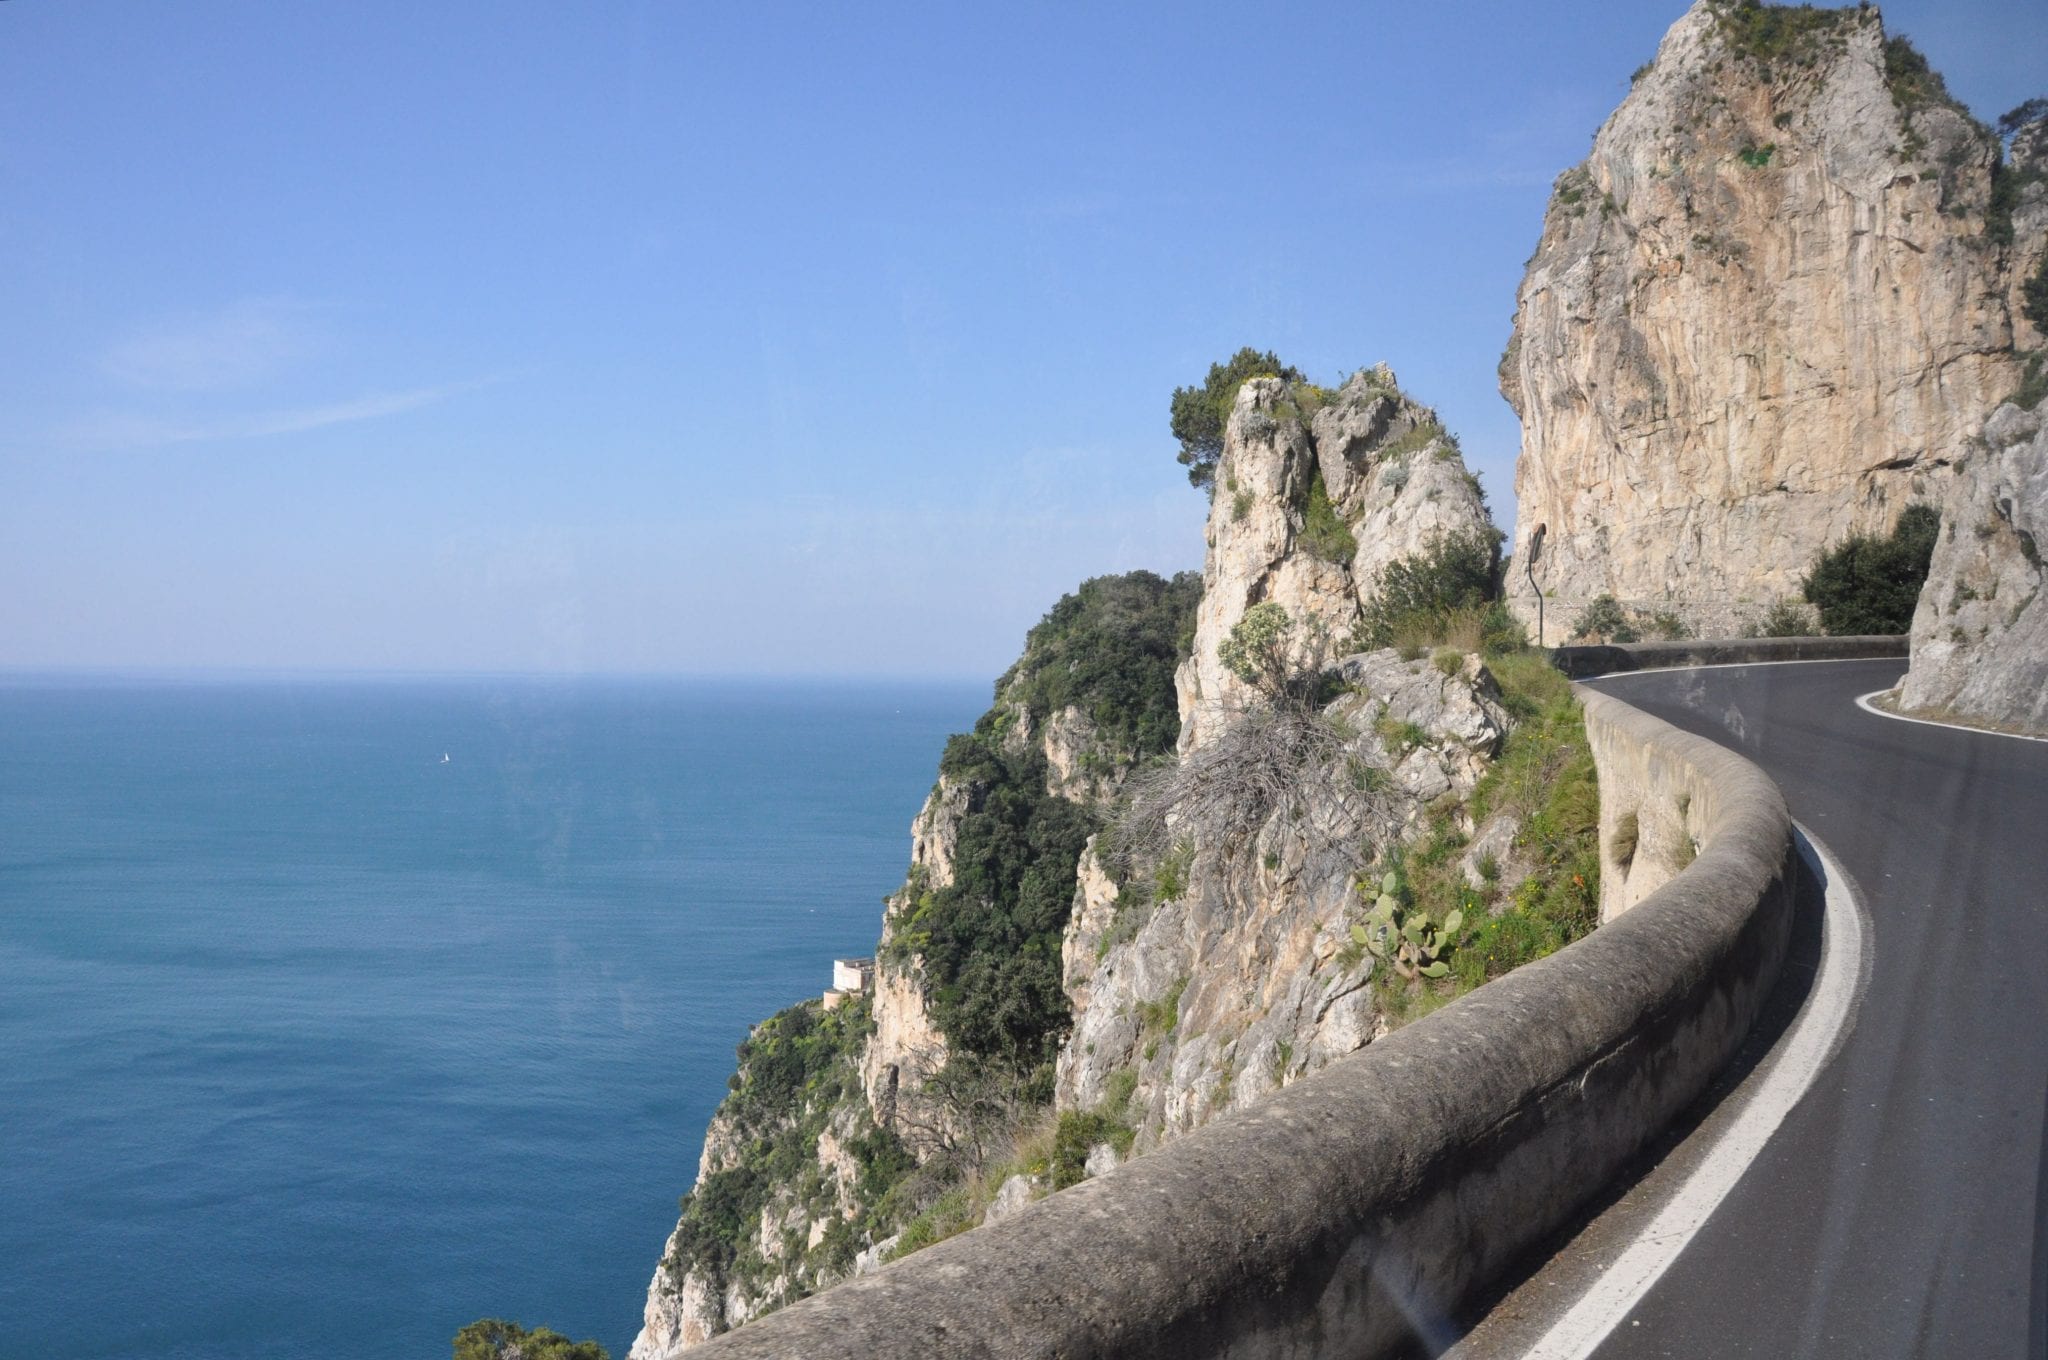 The SITA bus navigates the winding roads of the Amalfi Coast 